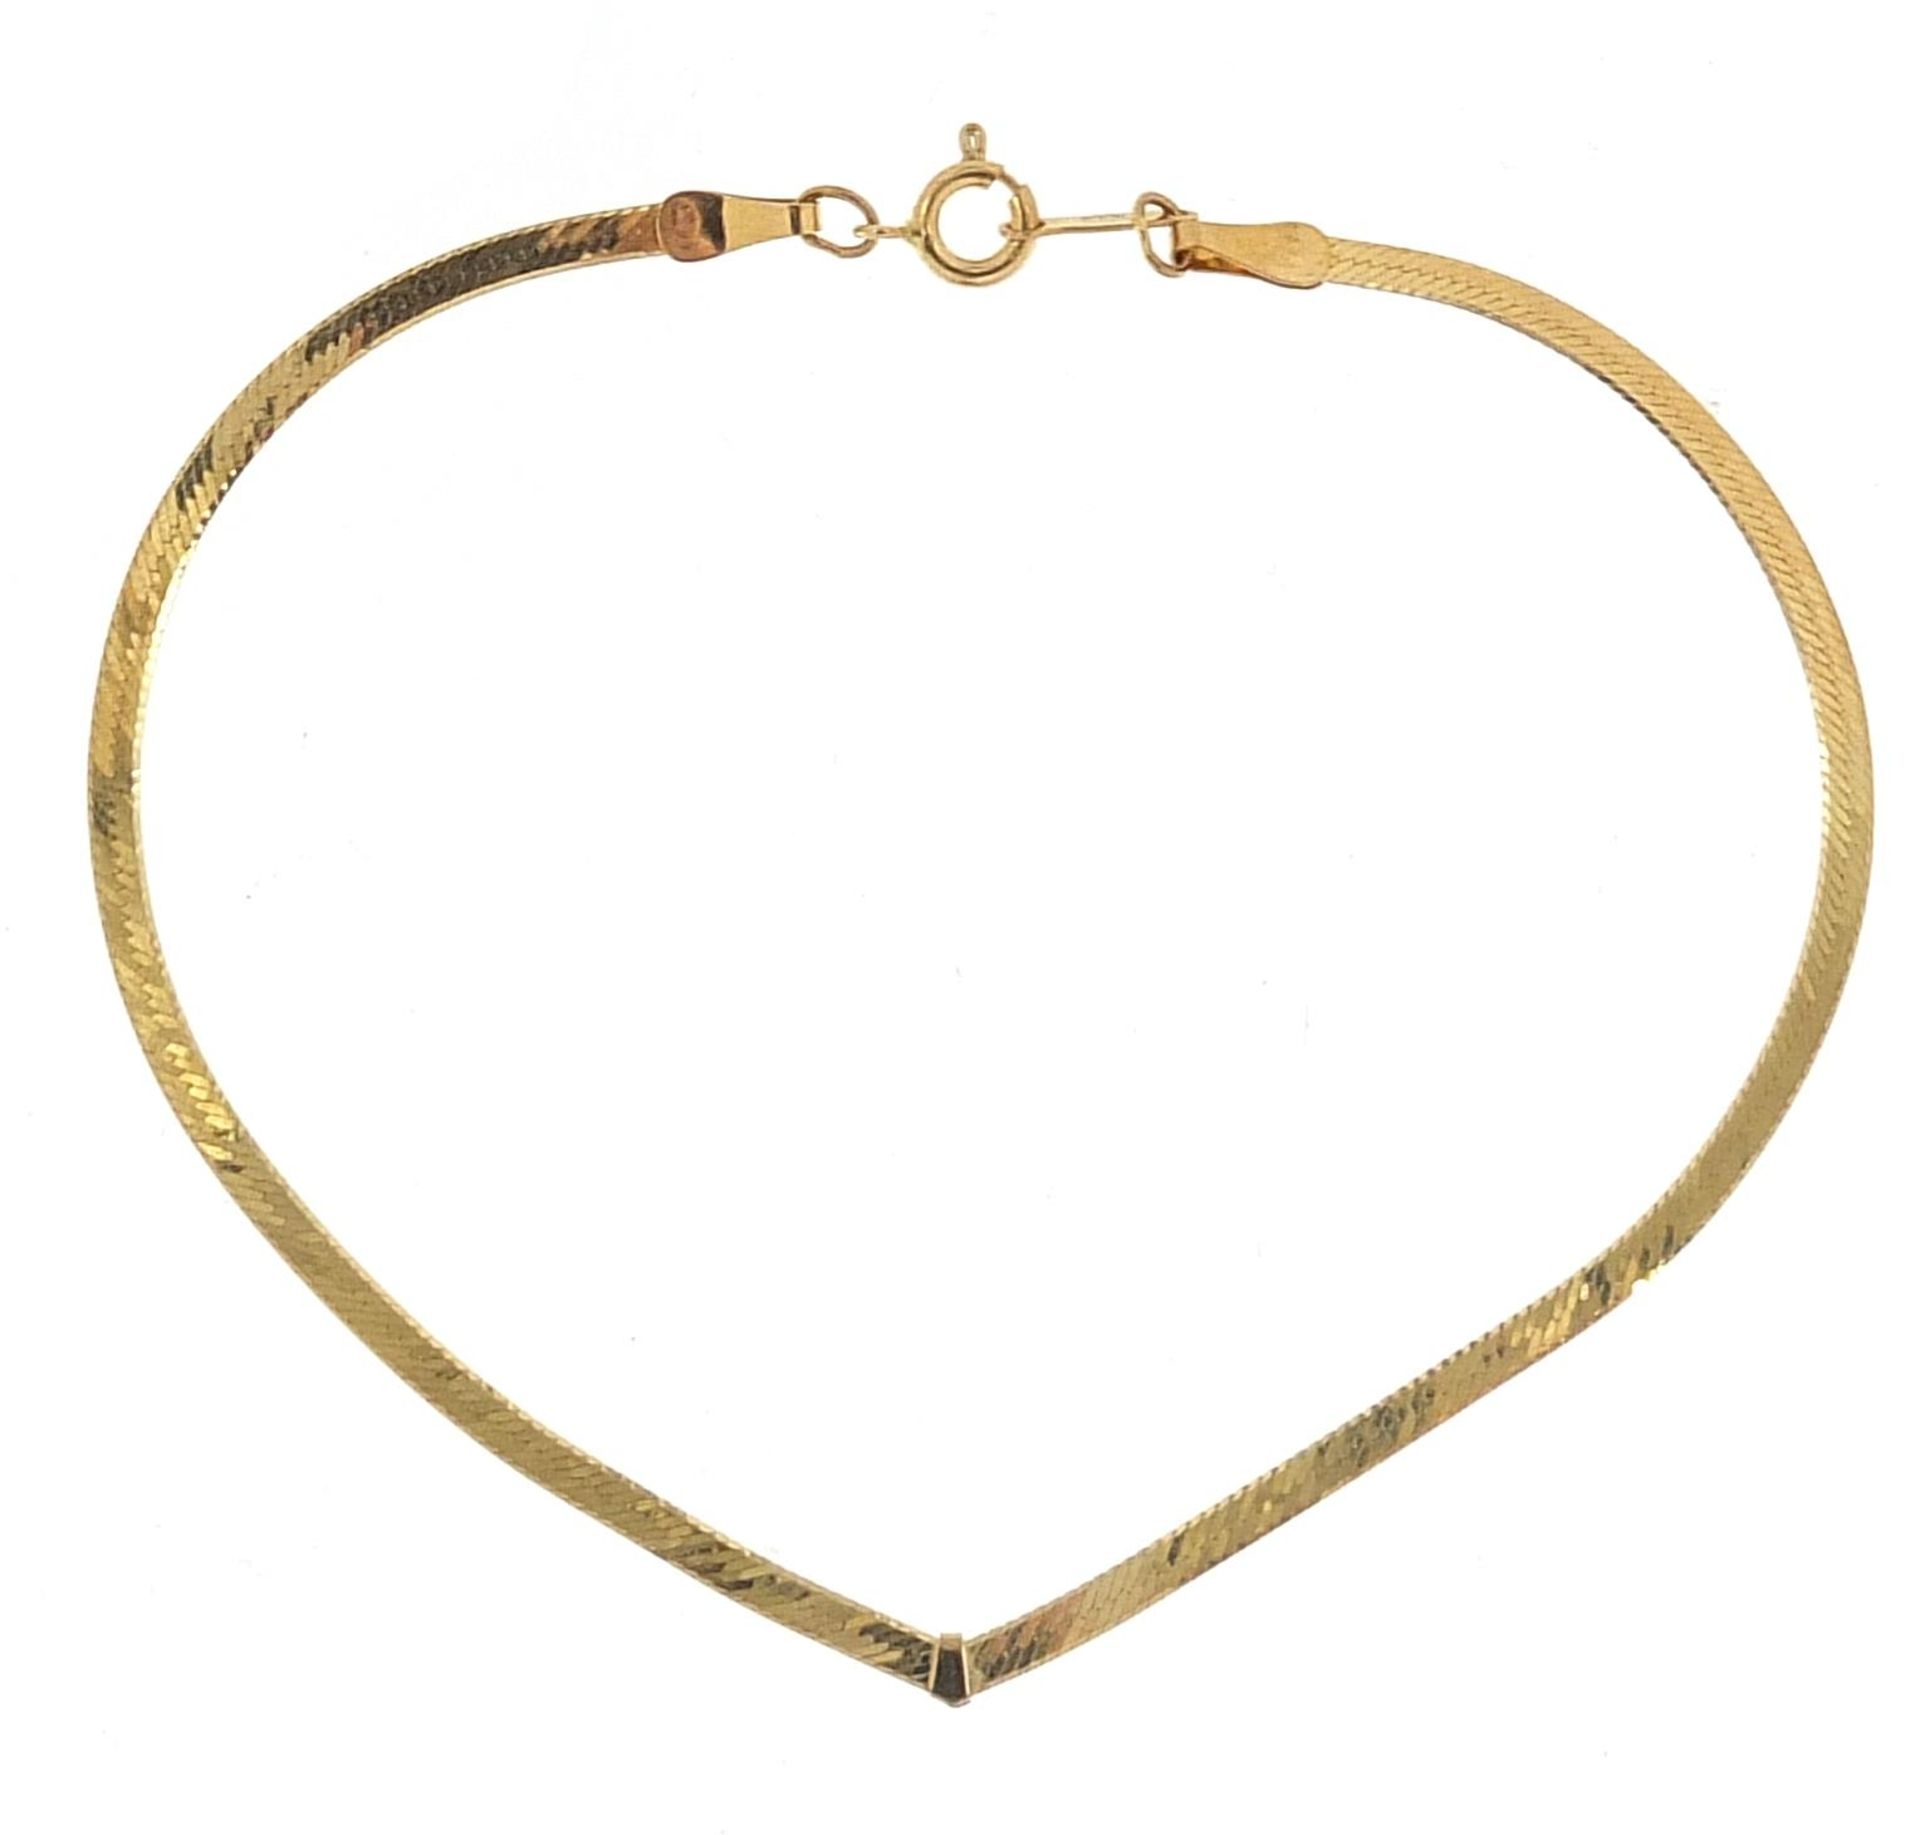 9ct gold herringbone link bracelet, 18cm in length, 0.9g